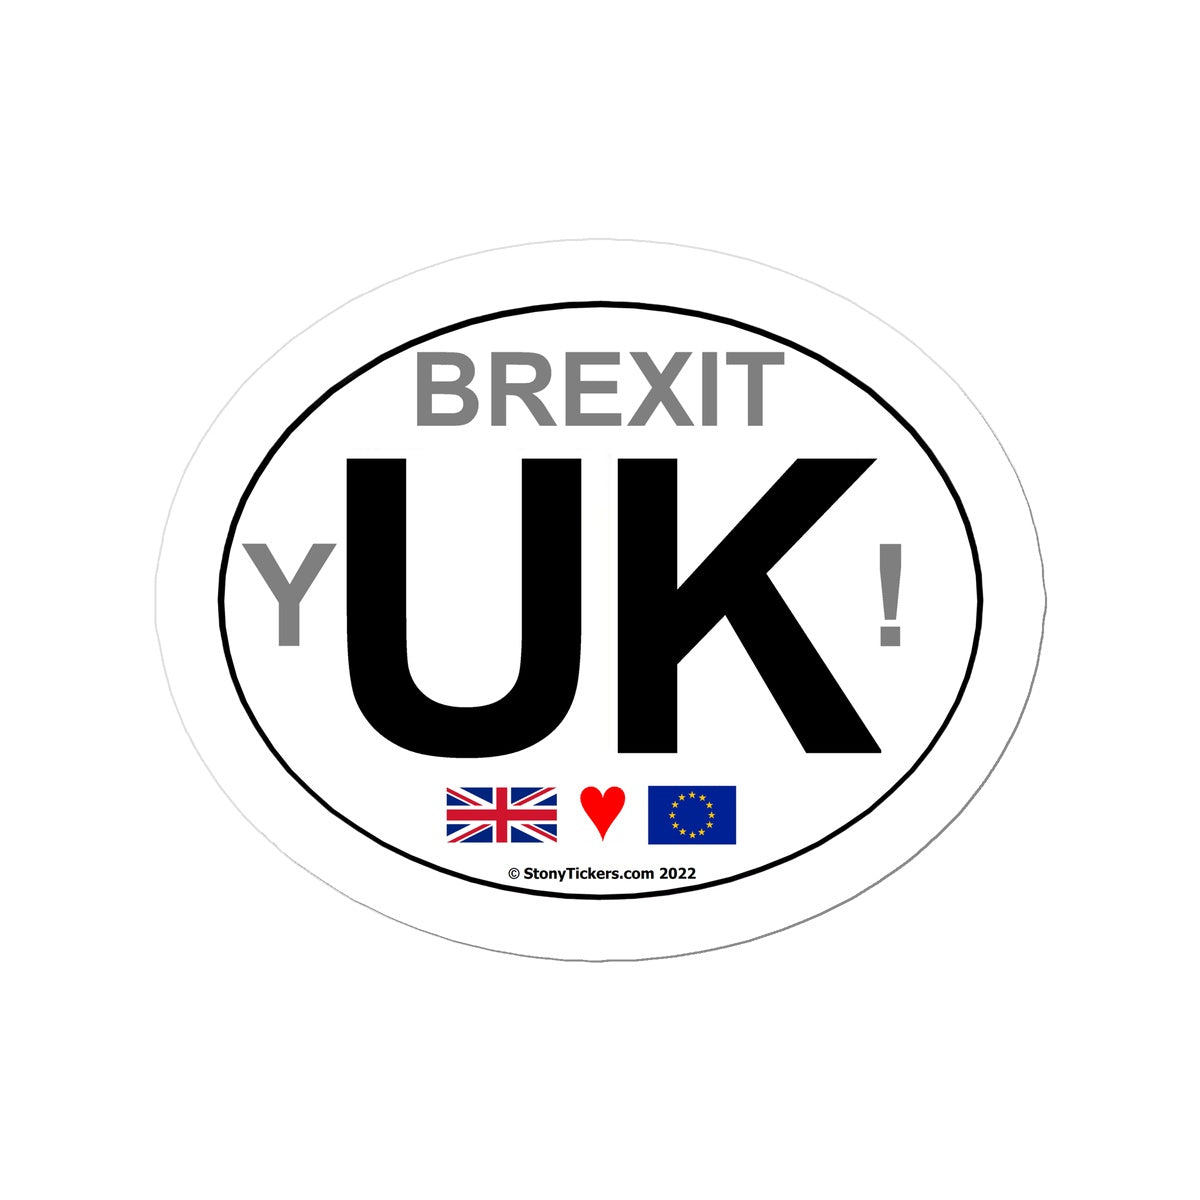 Brexit yUK! Car Sticker